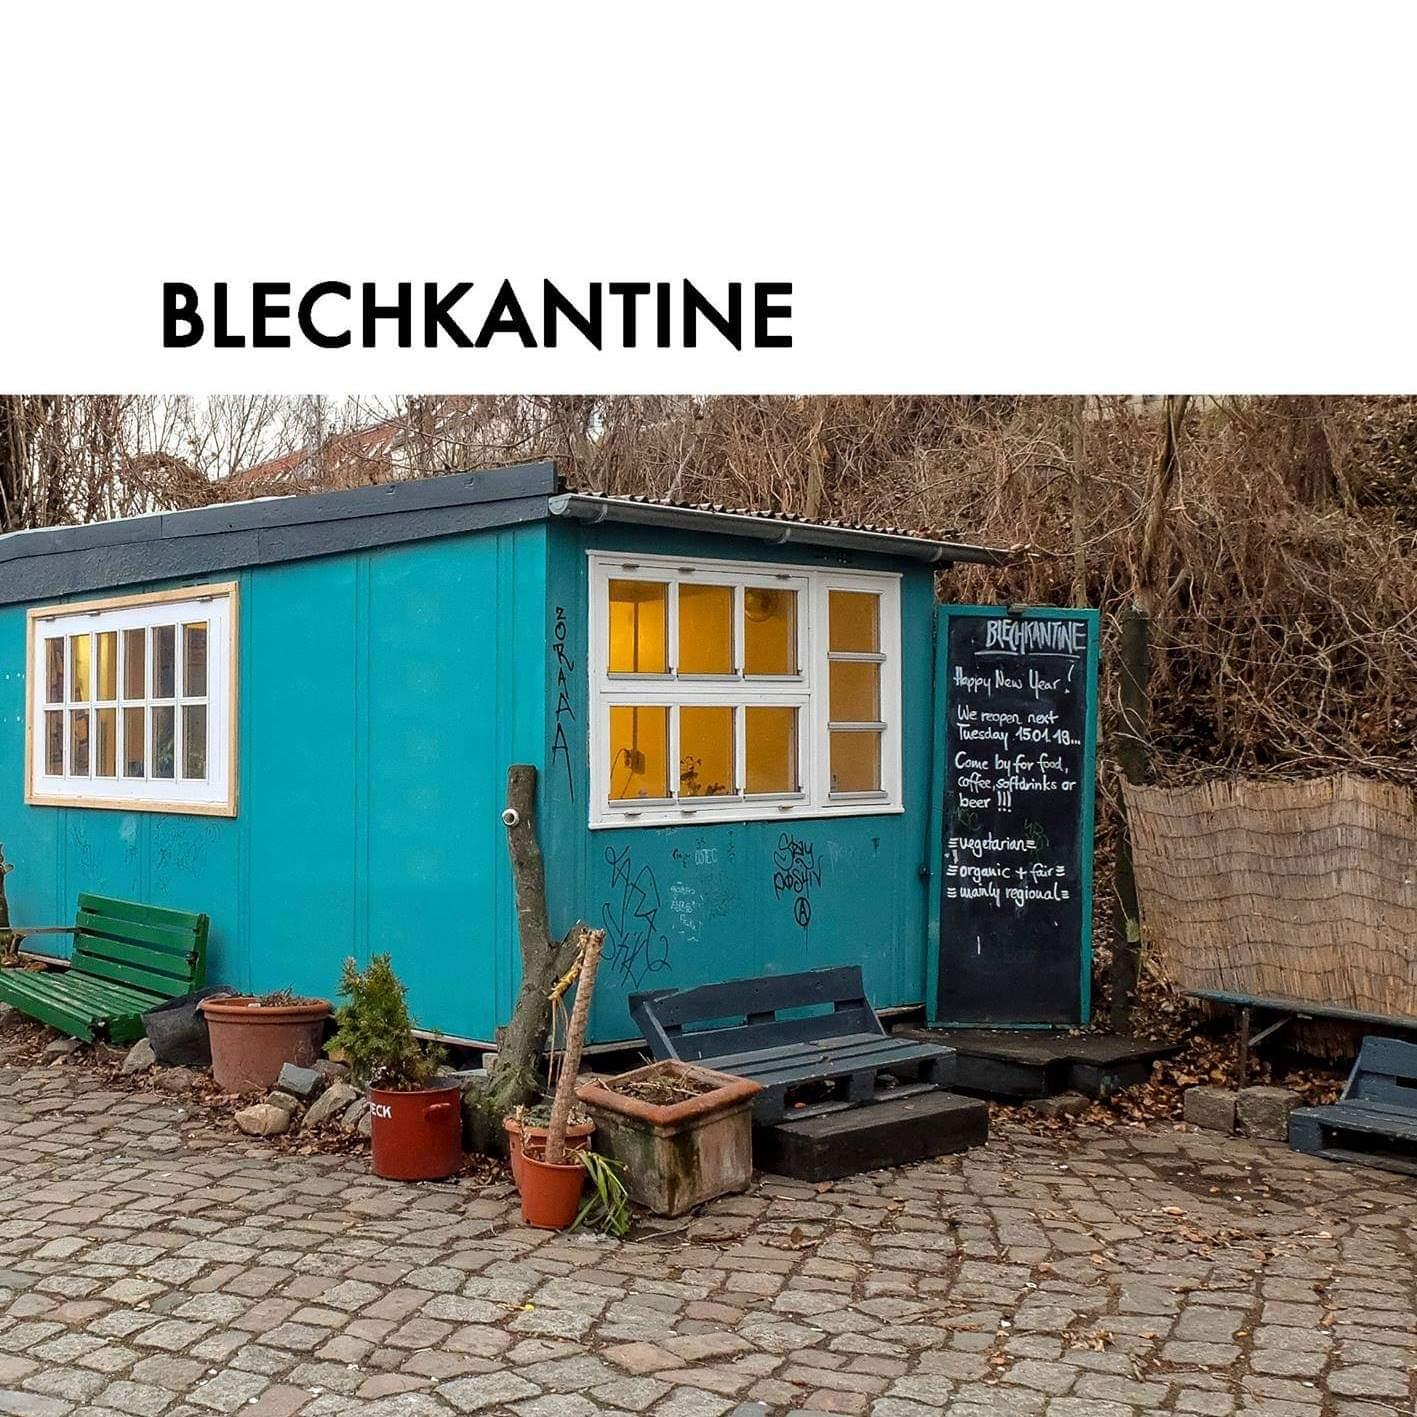 Restaurant "Blechkantine" in Berlin